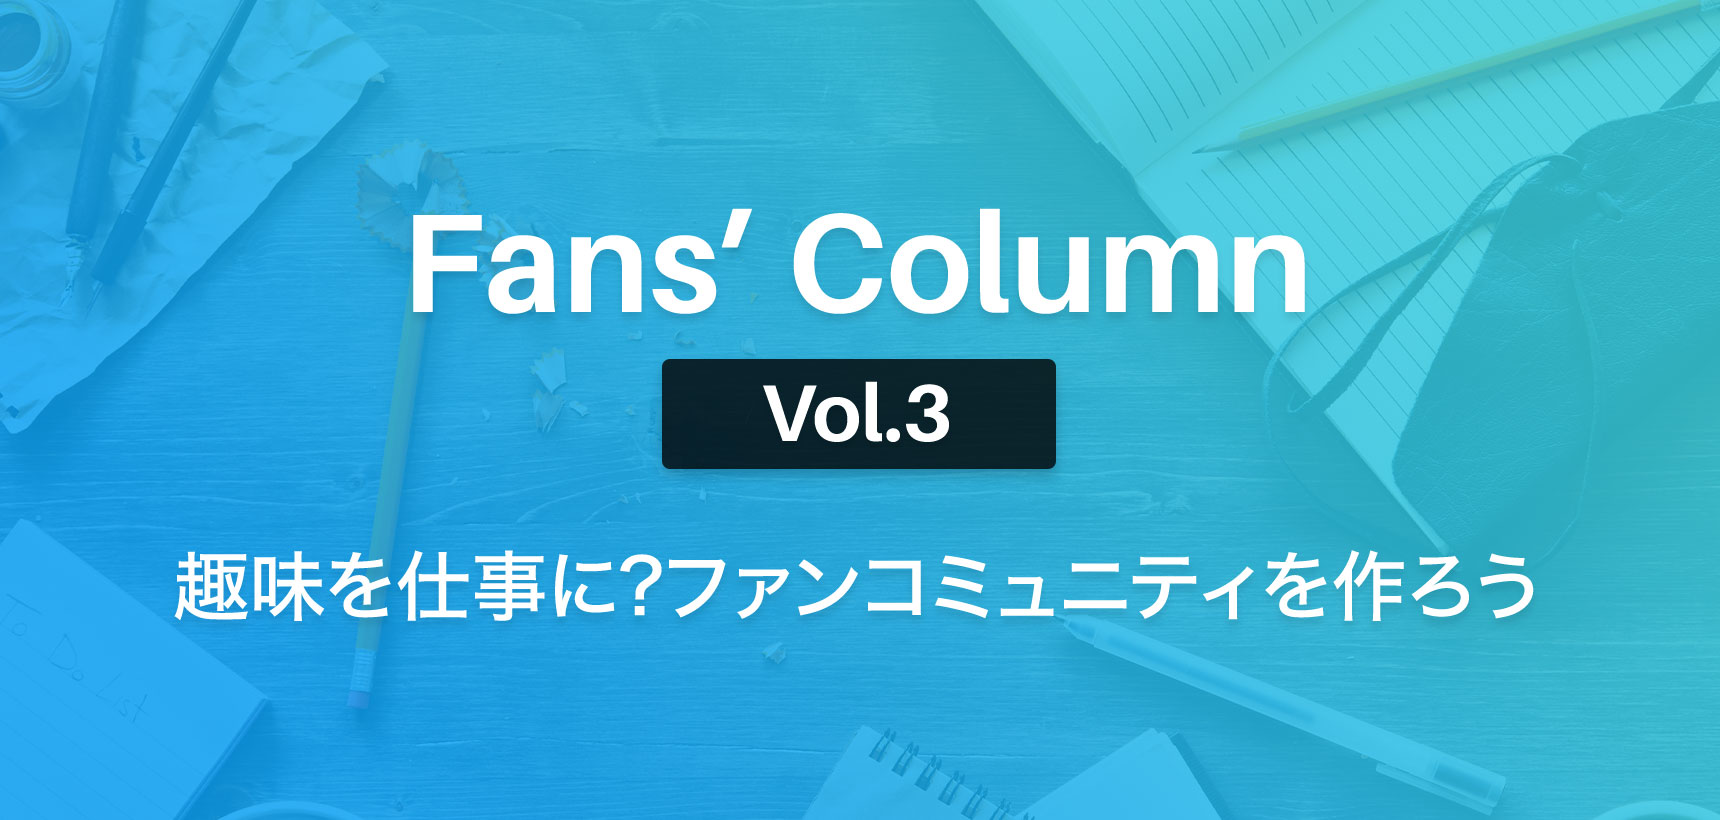 Fans’ Column | ファンズコラム Vol.3 趣味を仕事に?ファンクラブを作ろう